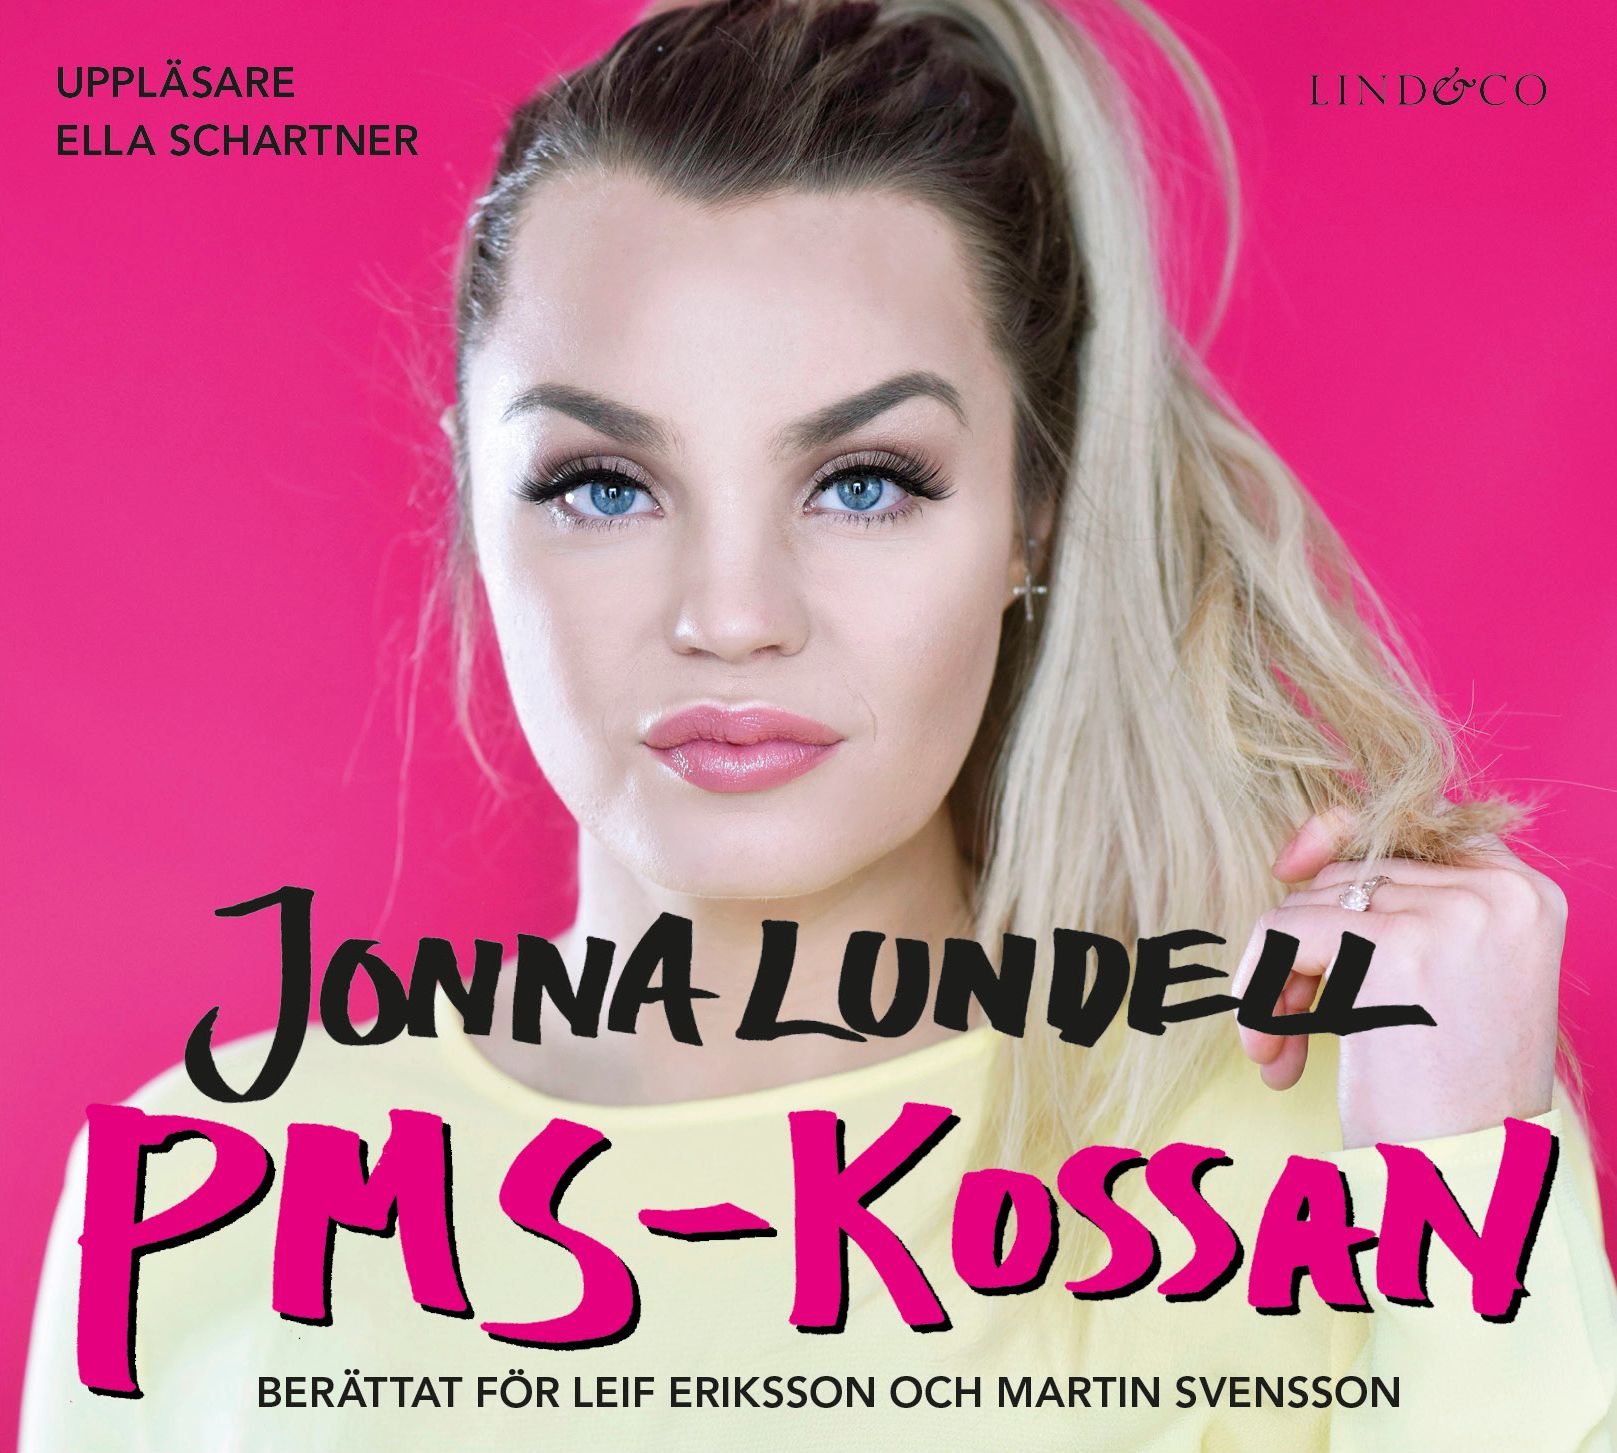 Jonna Lundell - PMS-kossan, ljudbok av Leif Eriksson, Jonna Lundell, Martin Svensson